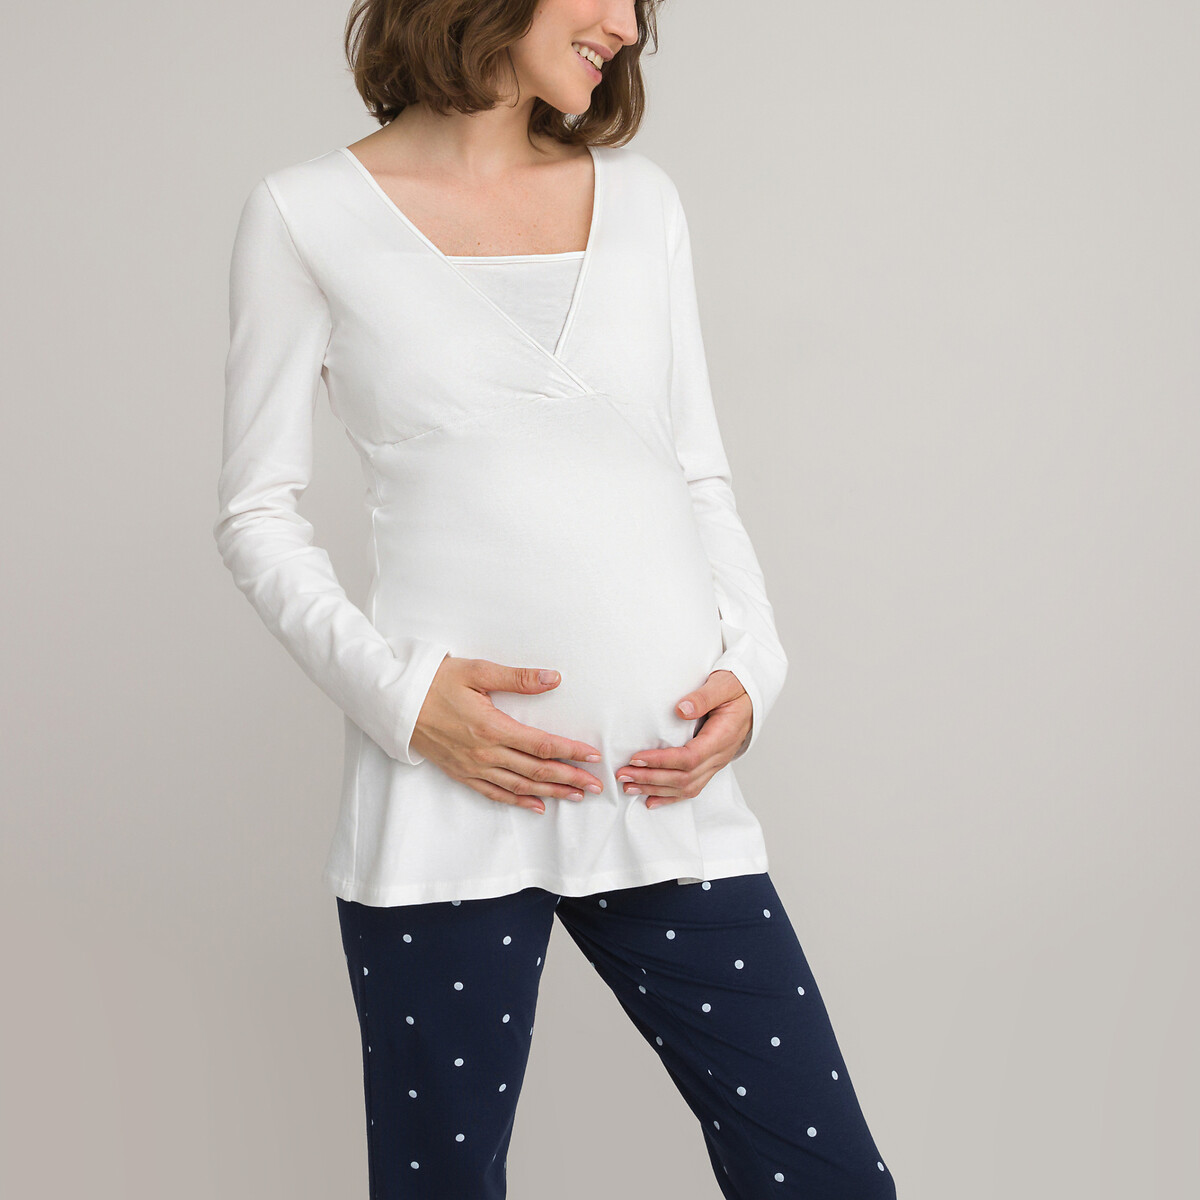 Pyjama grossesse et allaitement à pois – Bleu marine